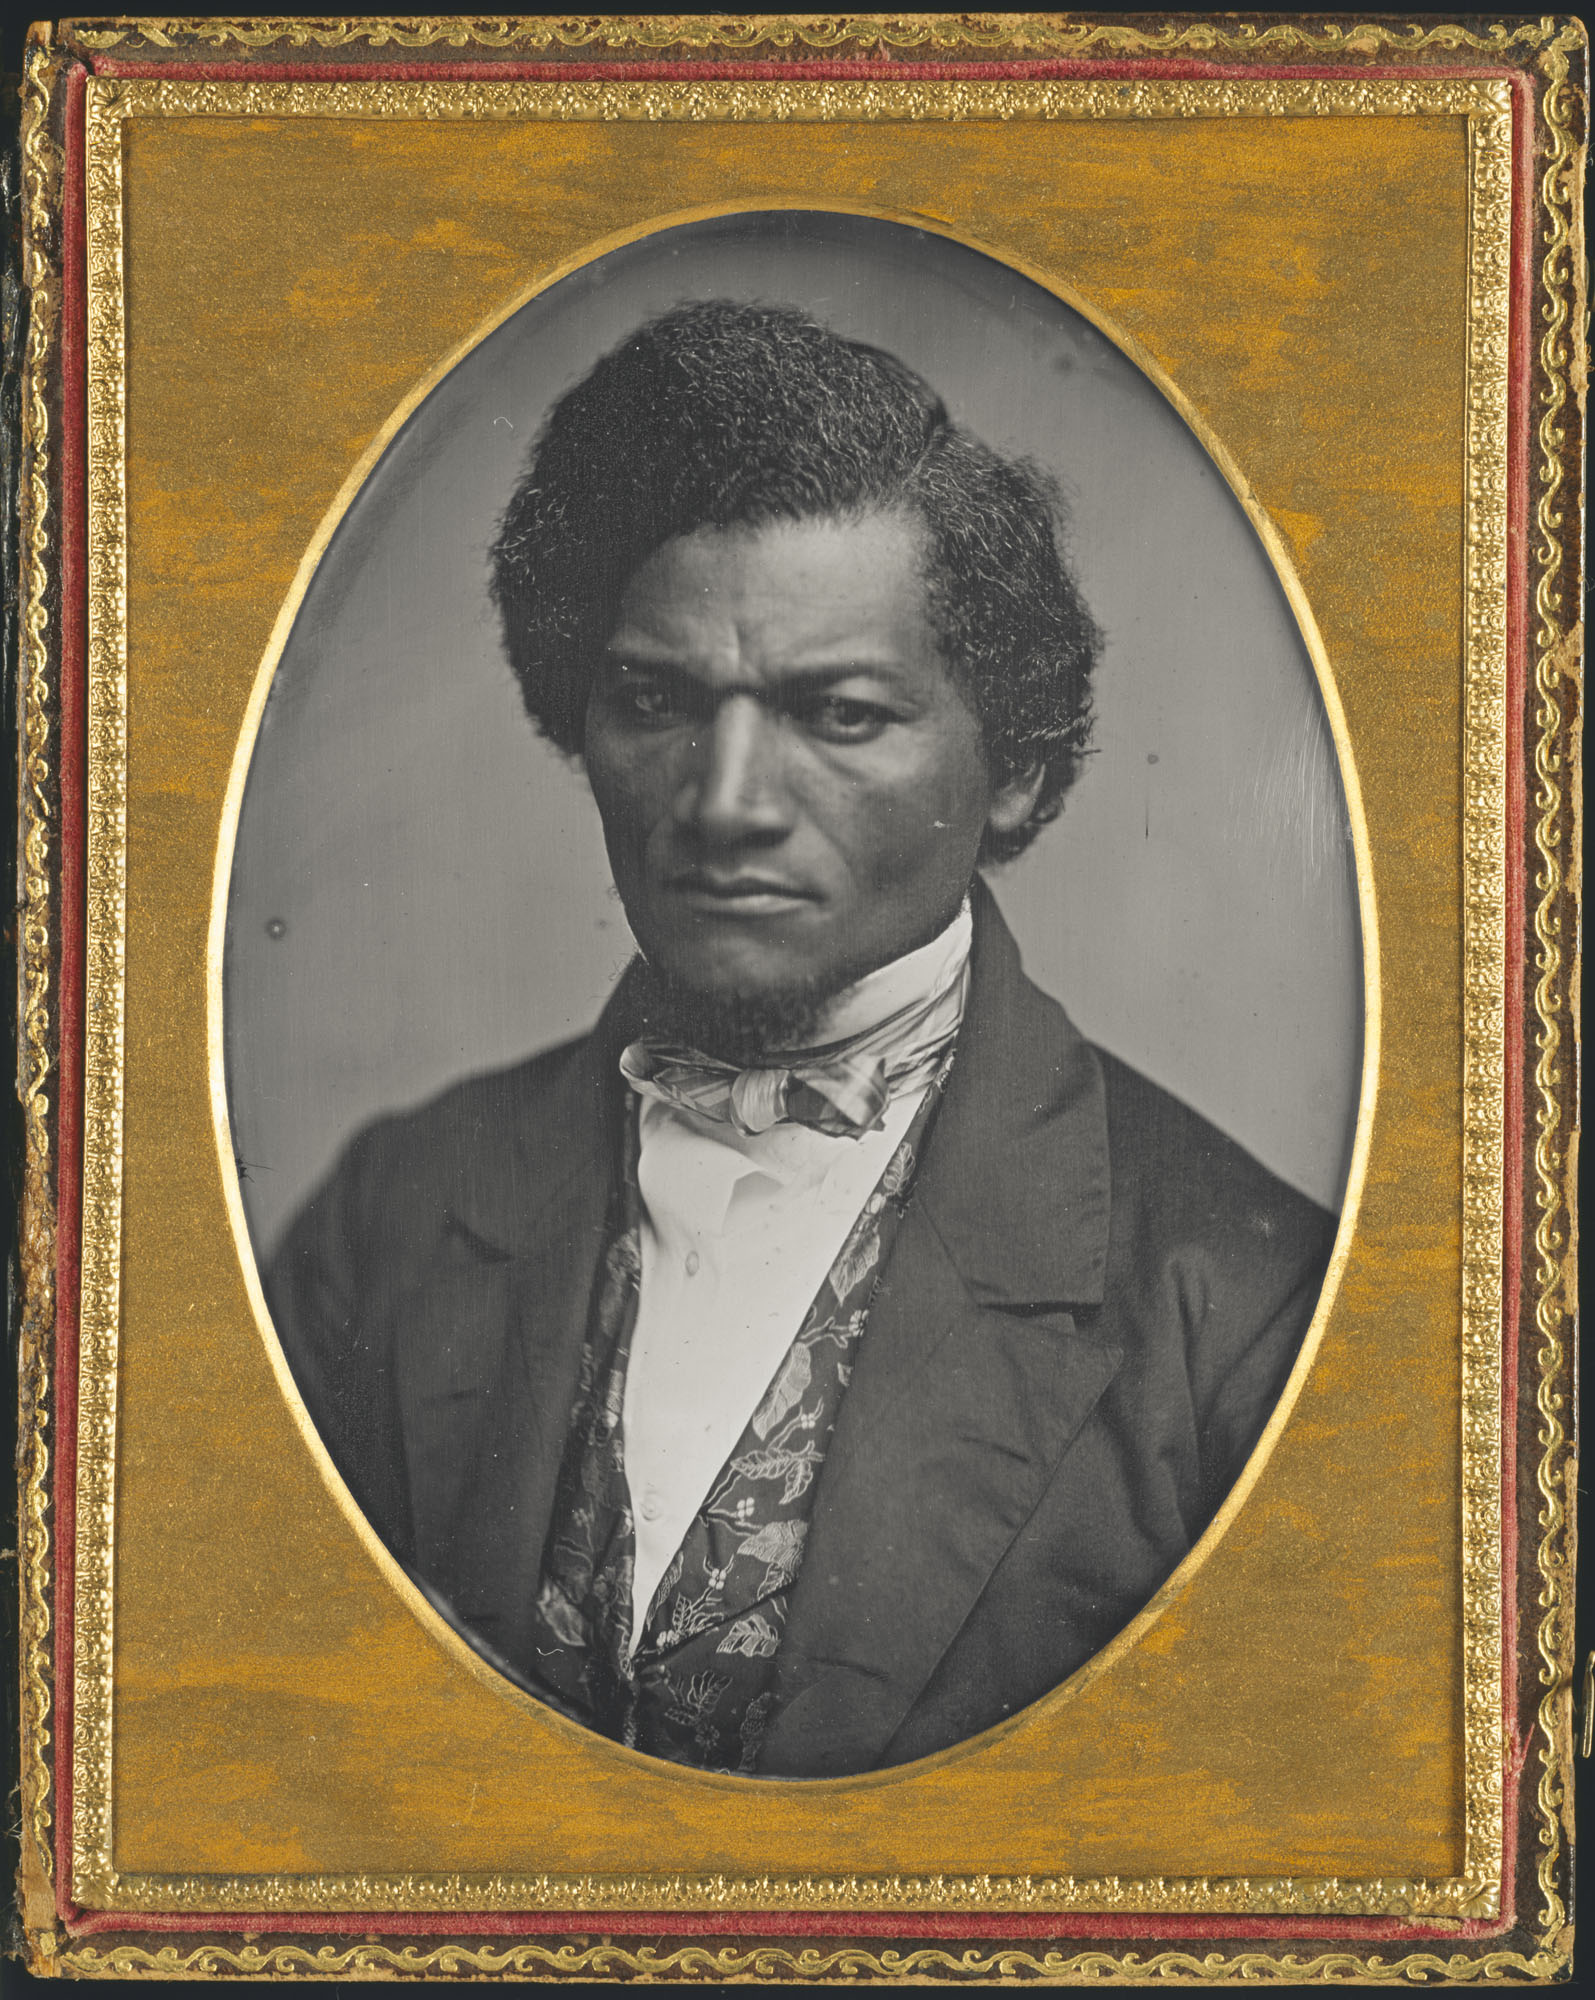 Samuel J. Miller, Frederick Douglass, 1847–52, daguerreotype, 5 1/2 x 4 1/8 inches (The Art Institute of Chicago)